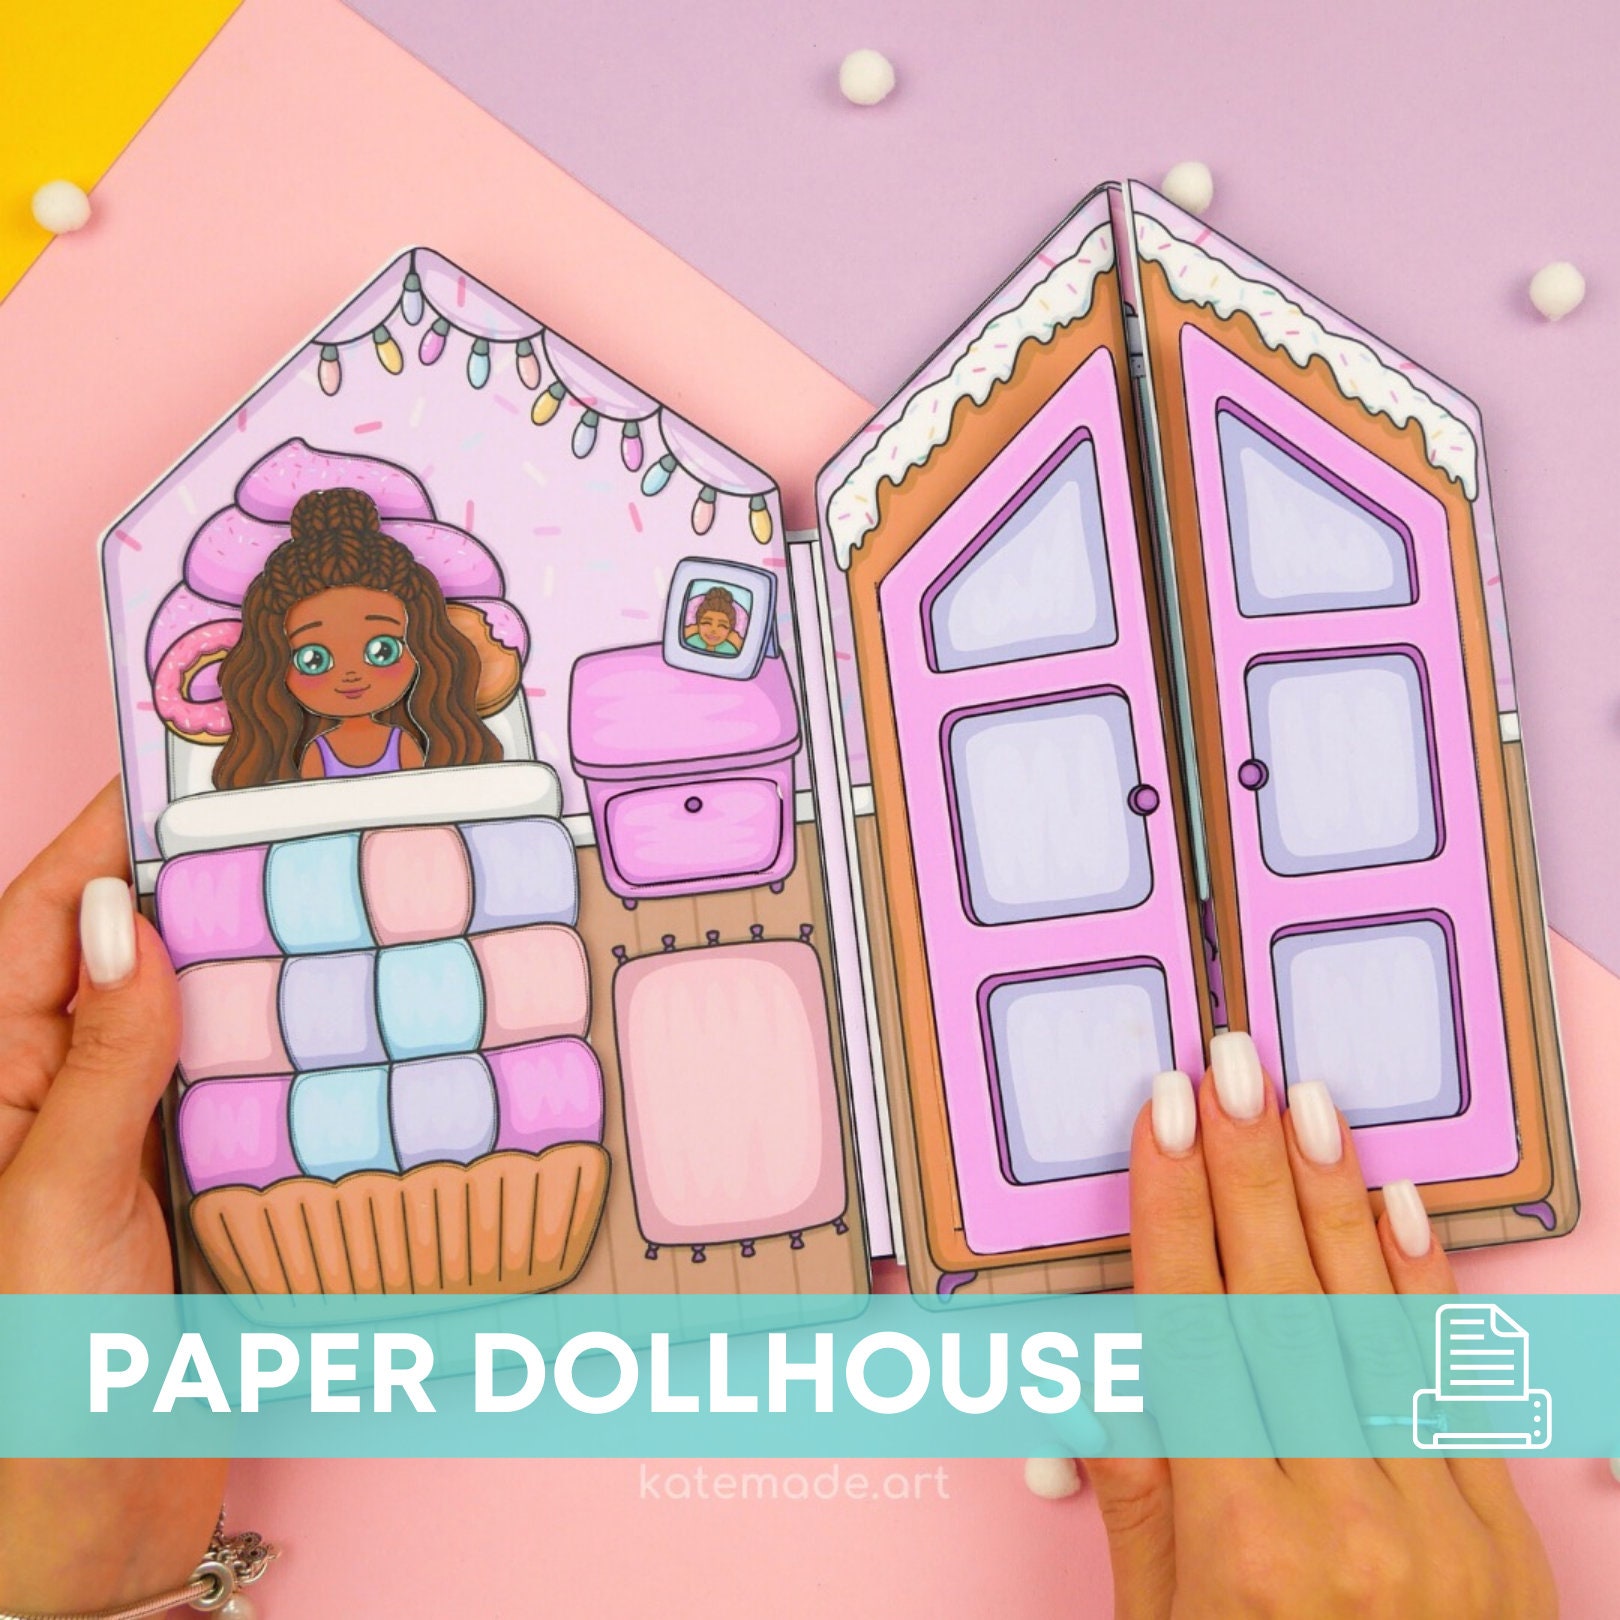 paper-dollhouse-ubicaciondepersonas-cdmx-gob-mx